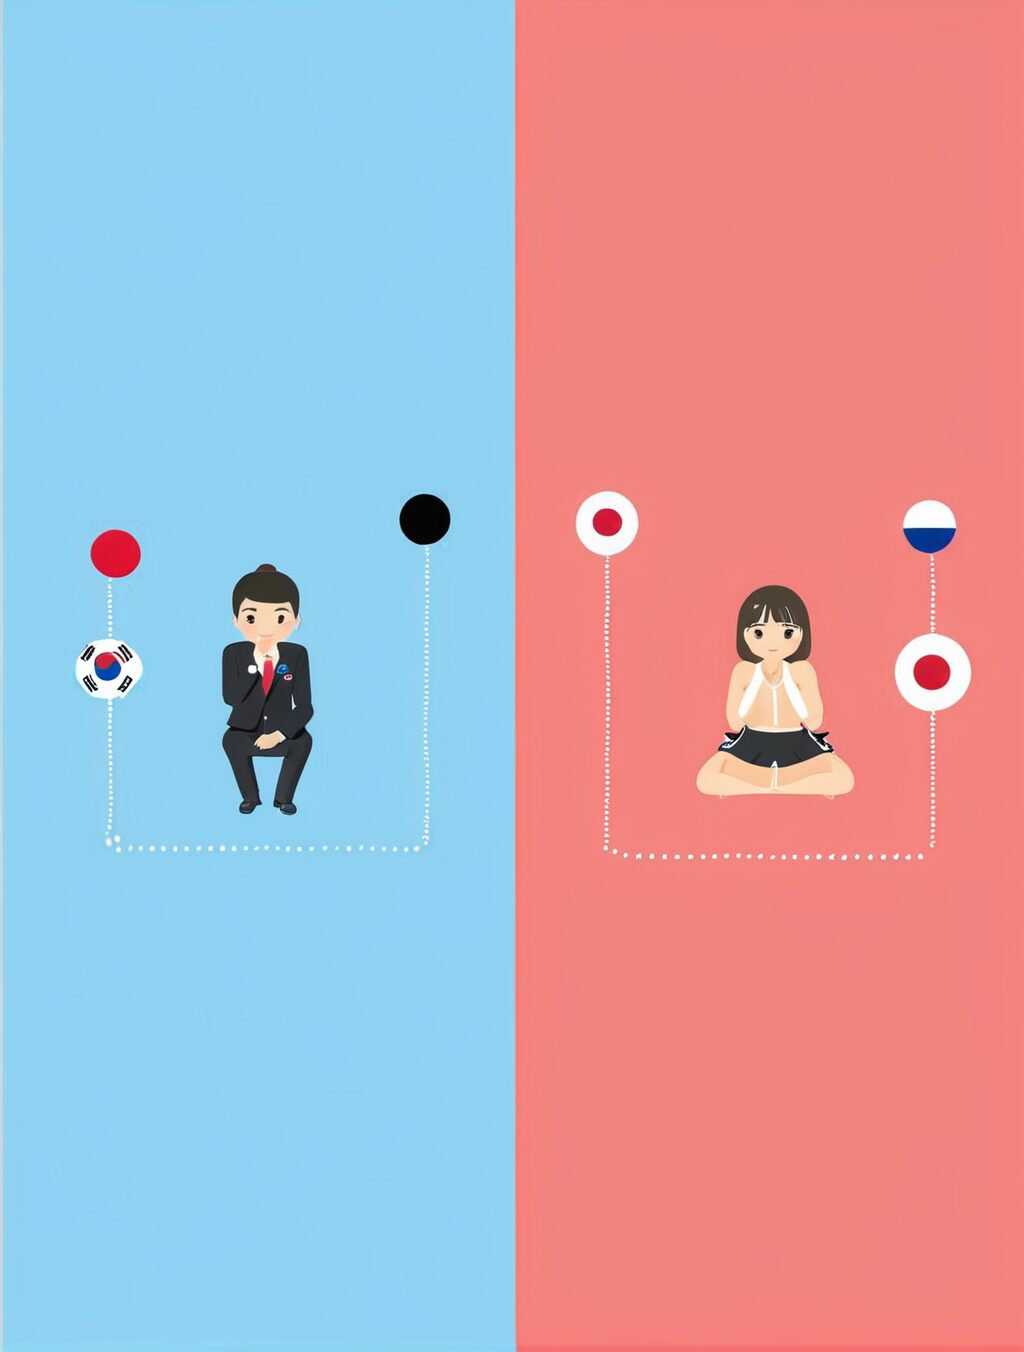 south korea vs japan culture